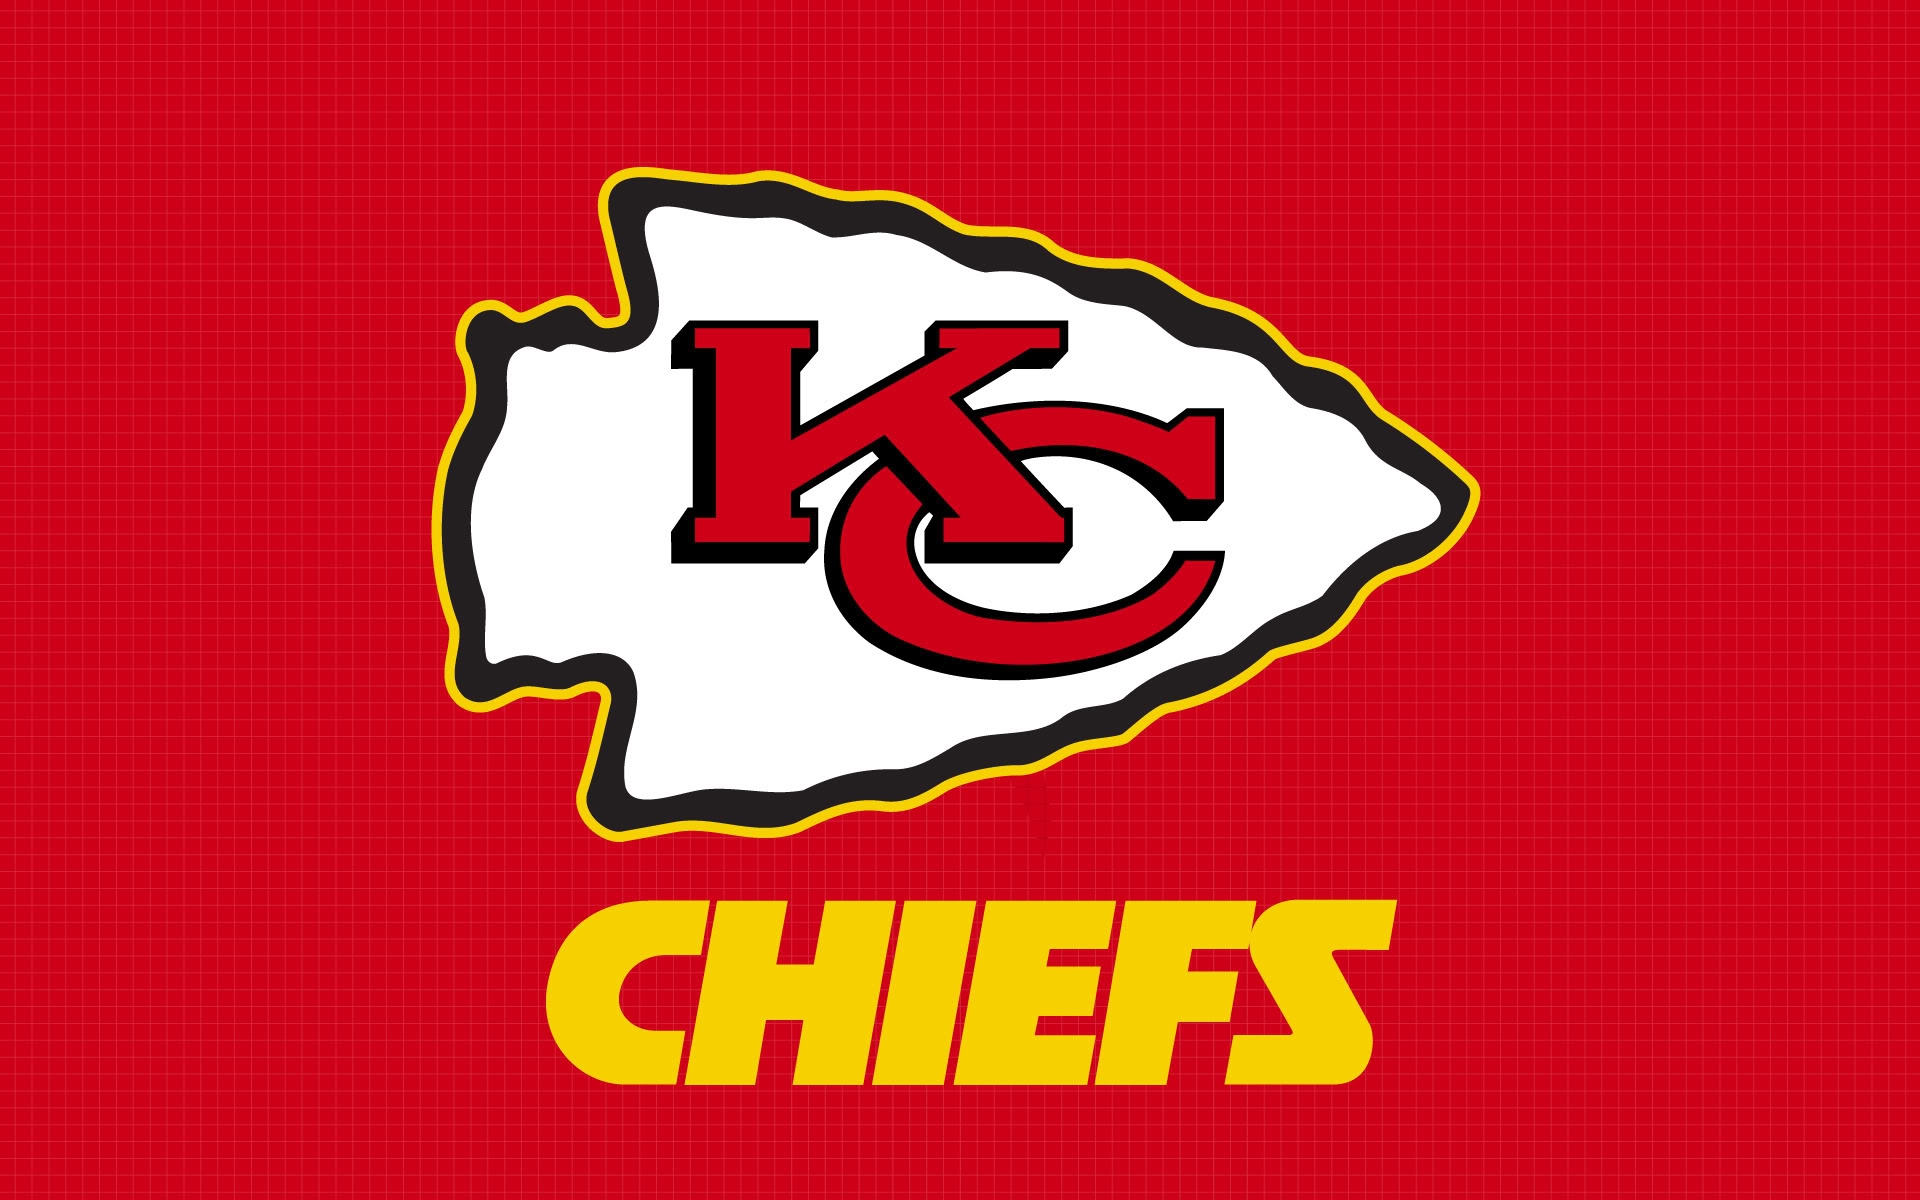 Kansas City Chiefs wallpaper background image Kansas City Chiefs